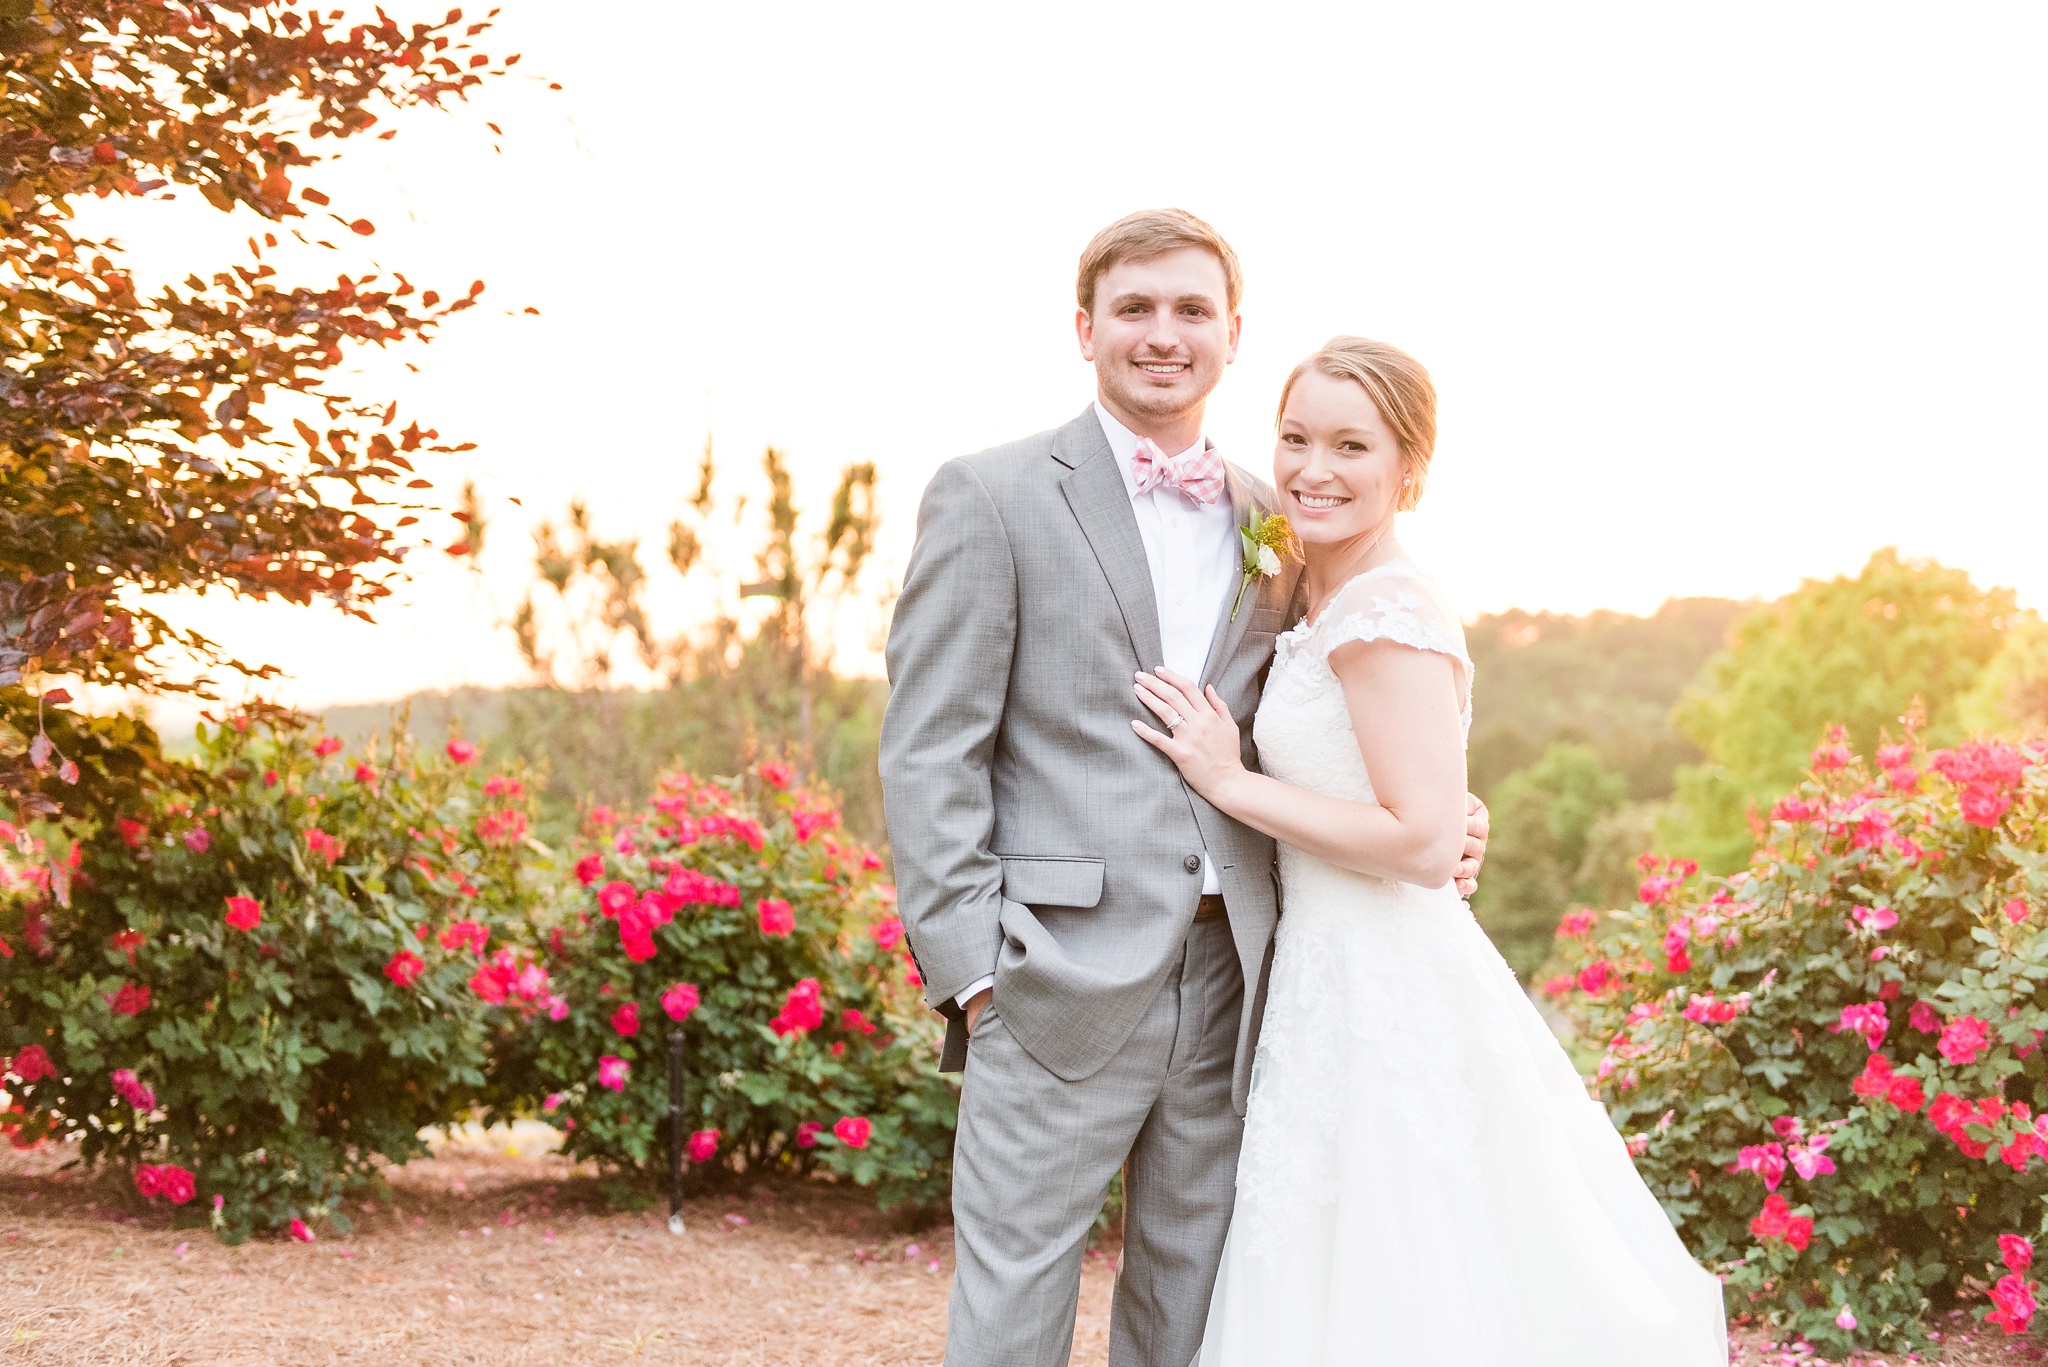 Briarwood Caroline House Blush Spring Garden Wedding | Birmingham Alabama Wedding Photographers_0064.jpg